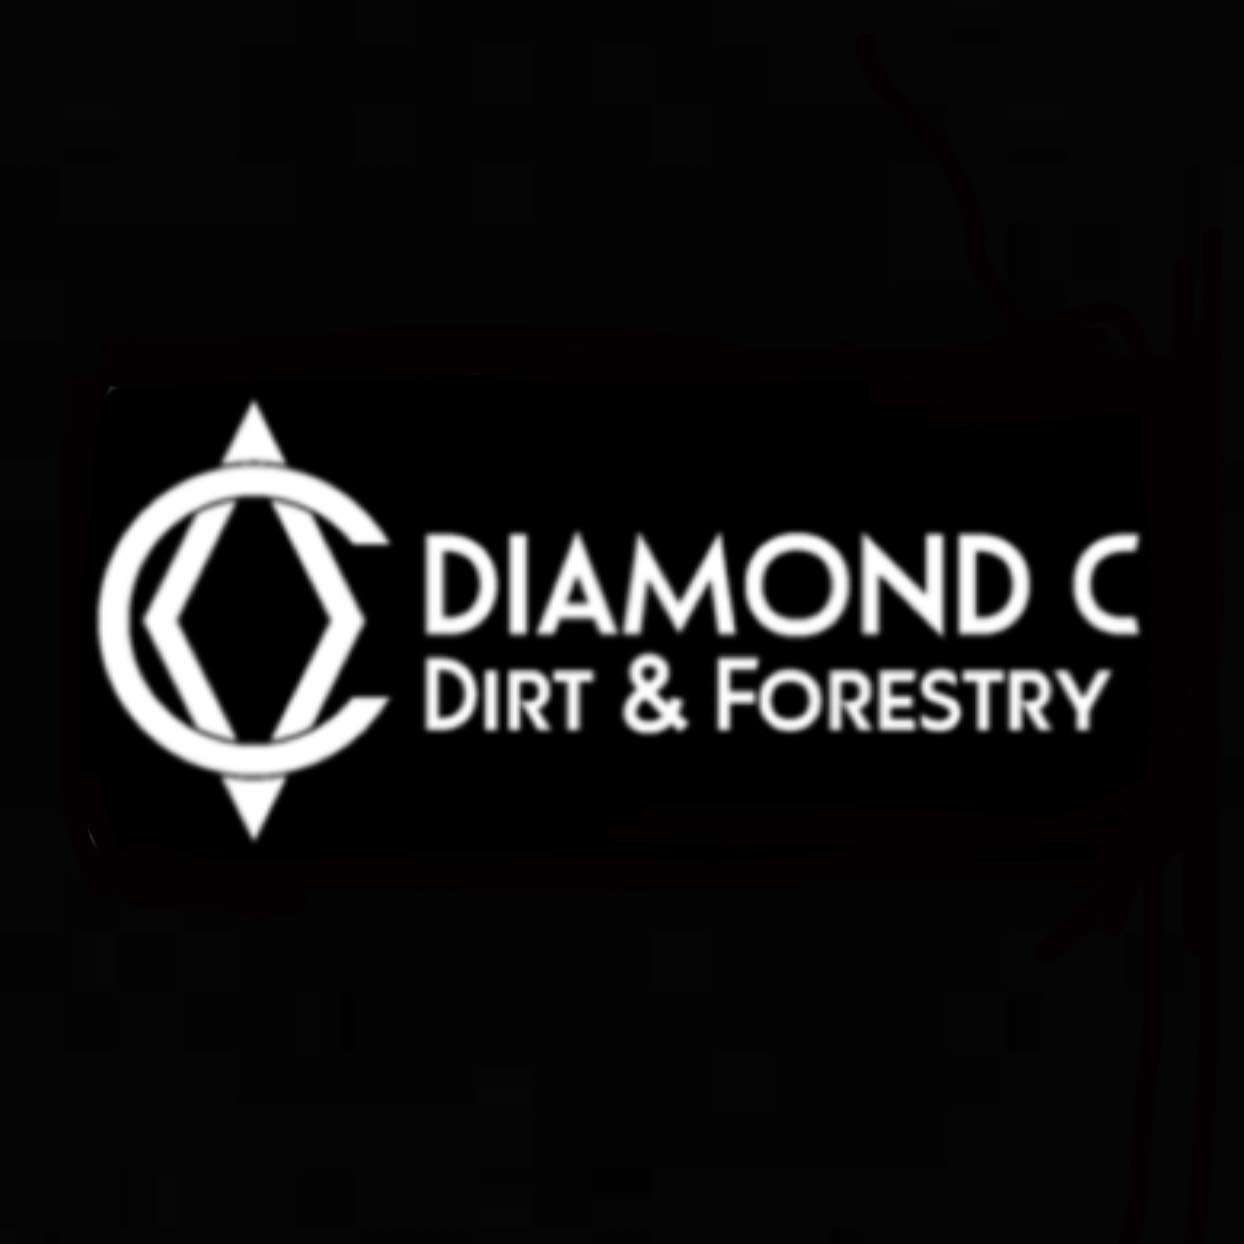 Diamond C Dirt & Forestry Logo